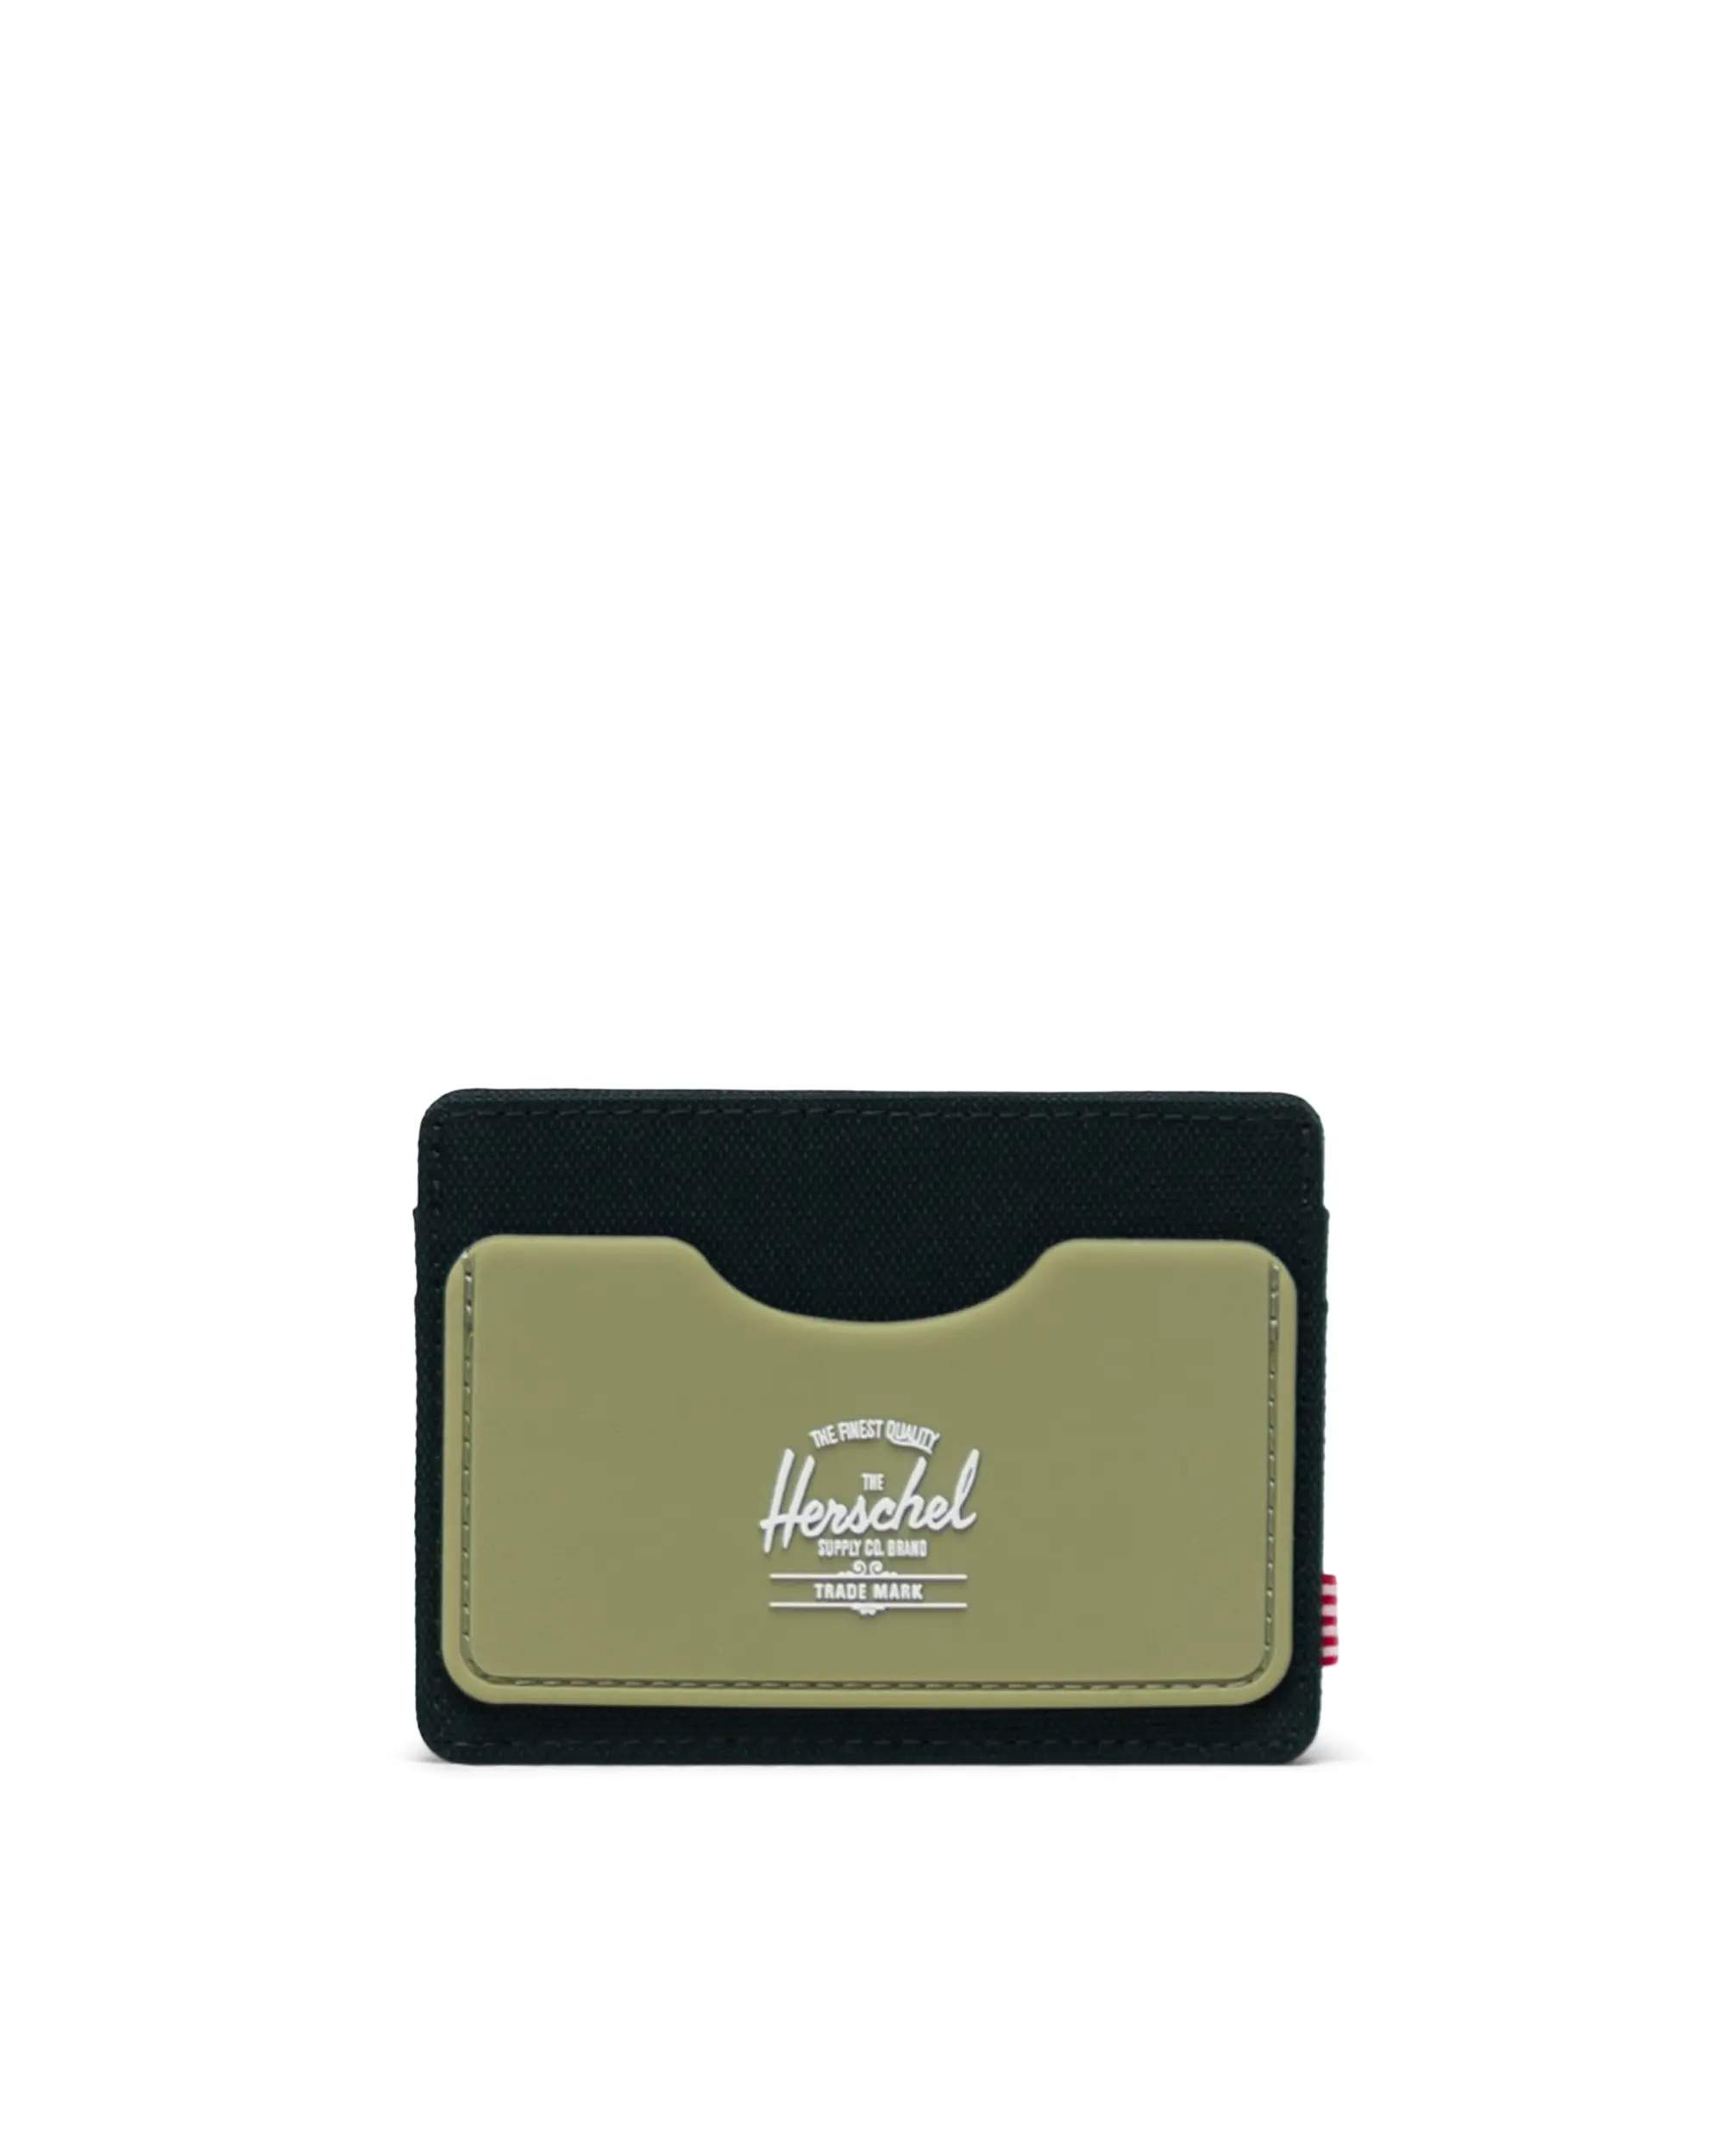 Top Layer Leather Zero Wallet, Super Soft Multi Card Holder Bag